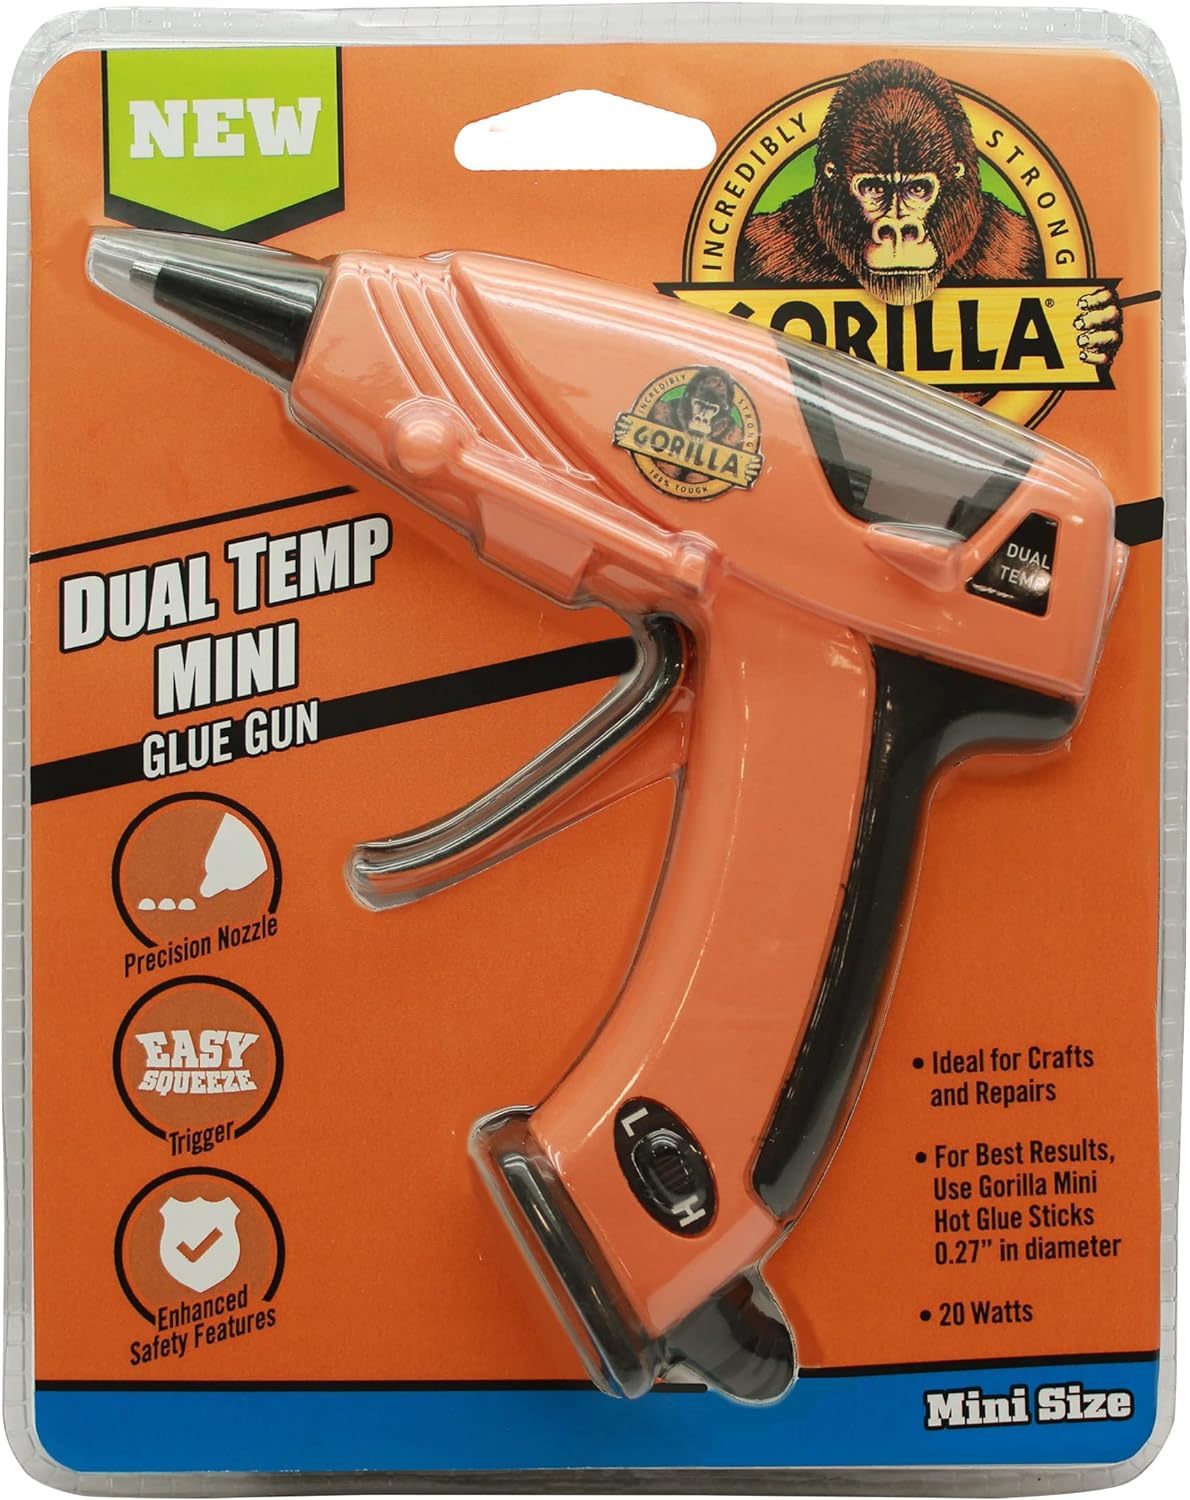 Gorilla Glue Gorilla 20 watts Dual Temperature Mini Glue Gun